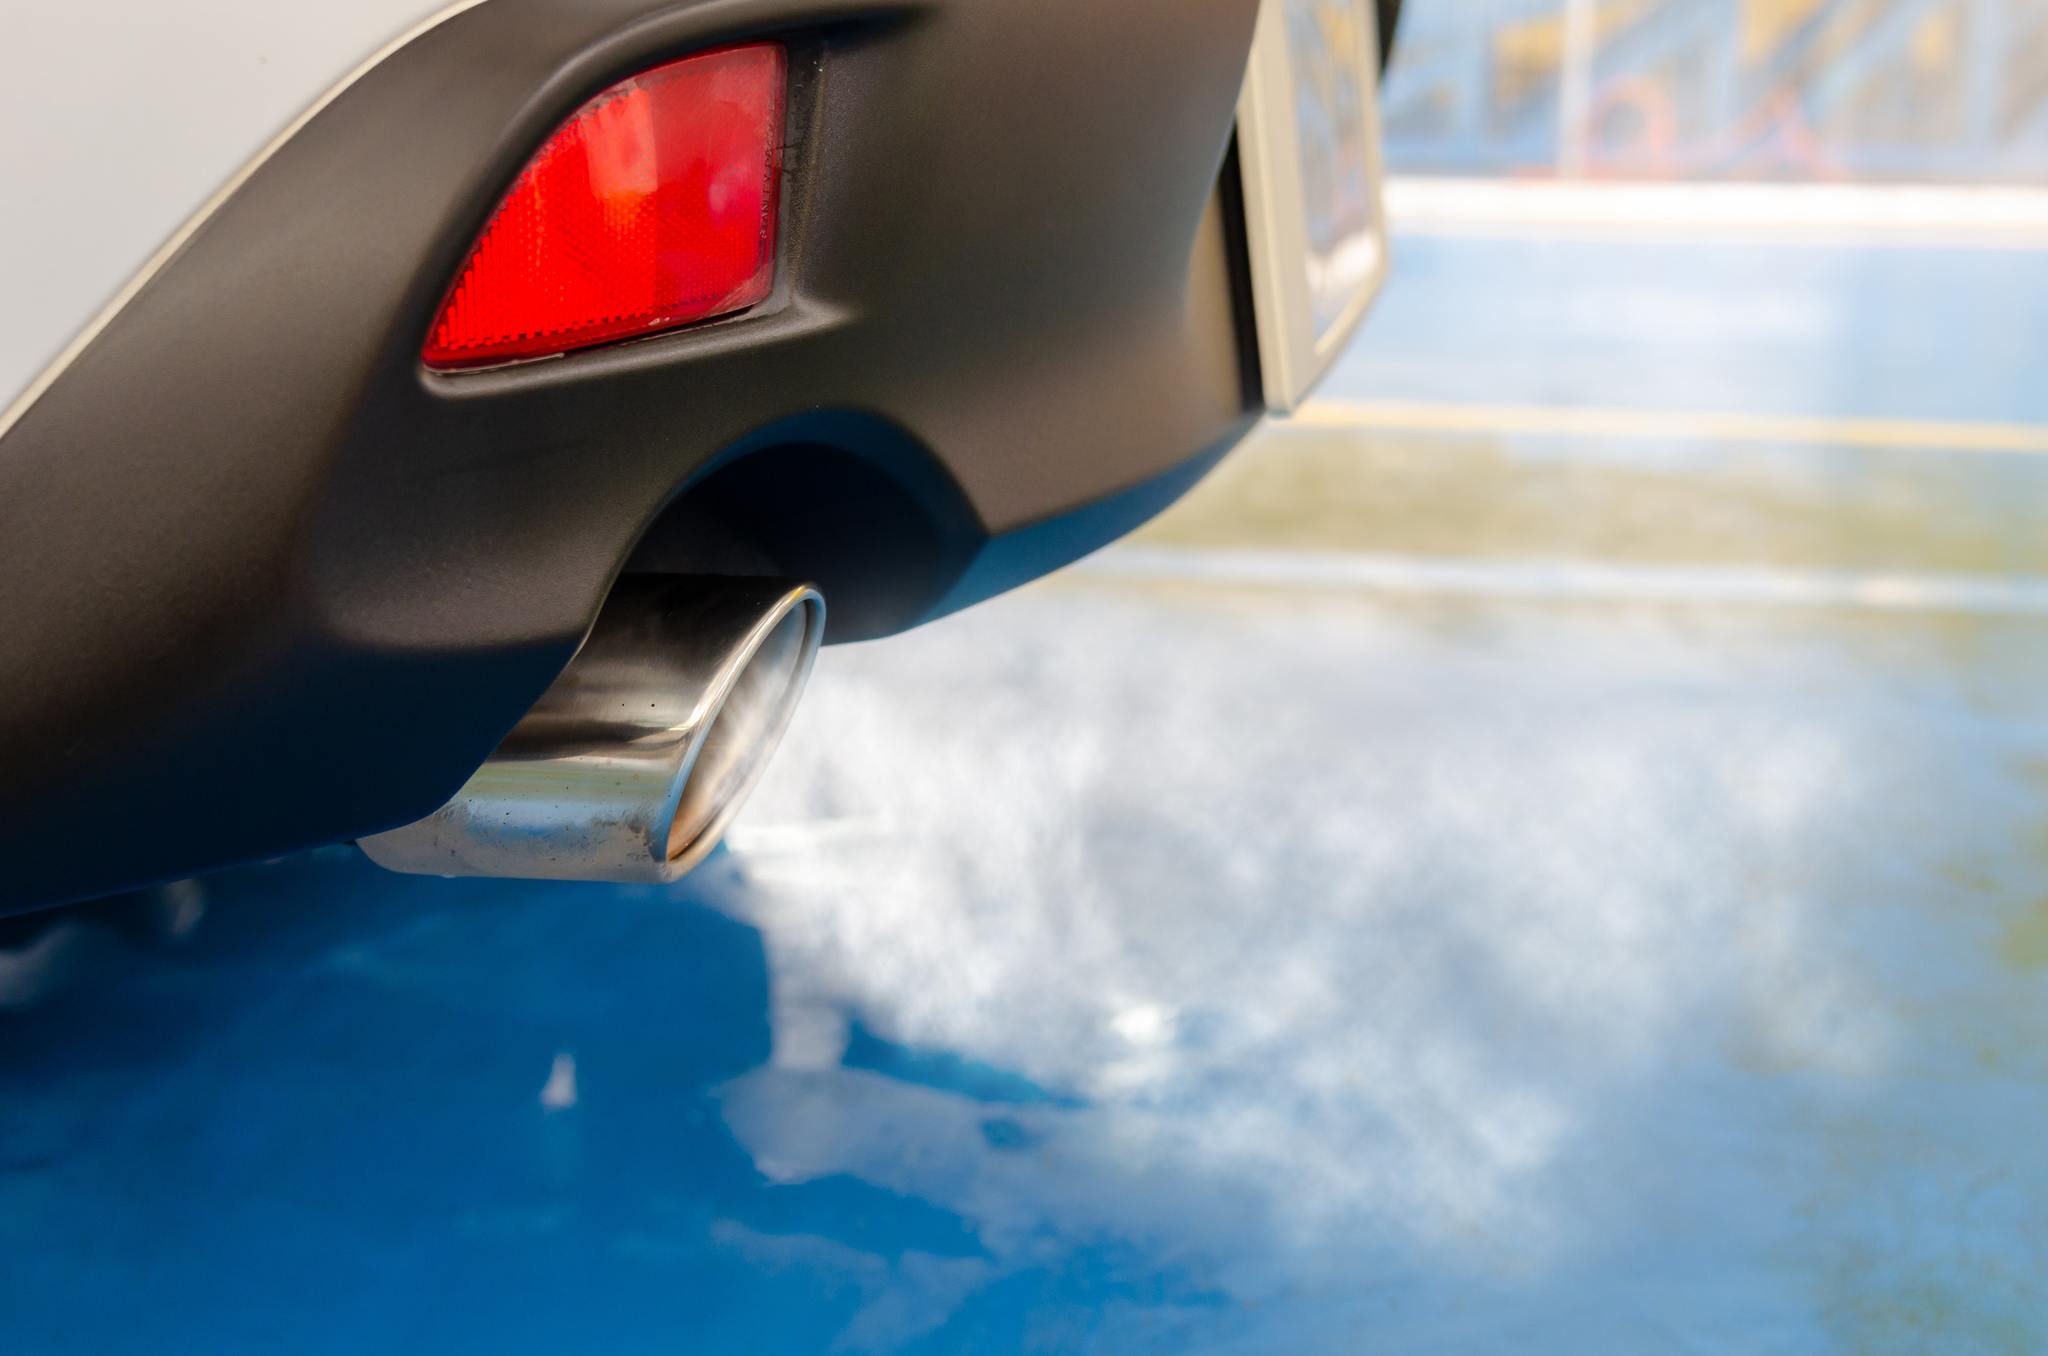 Euro 7 - norma anticontaminacion - emisiones - Comision Europea - diesel - gasolina